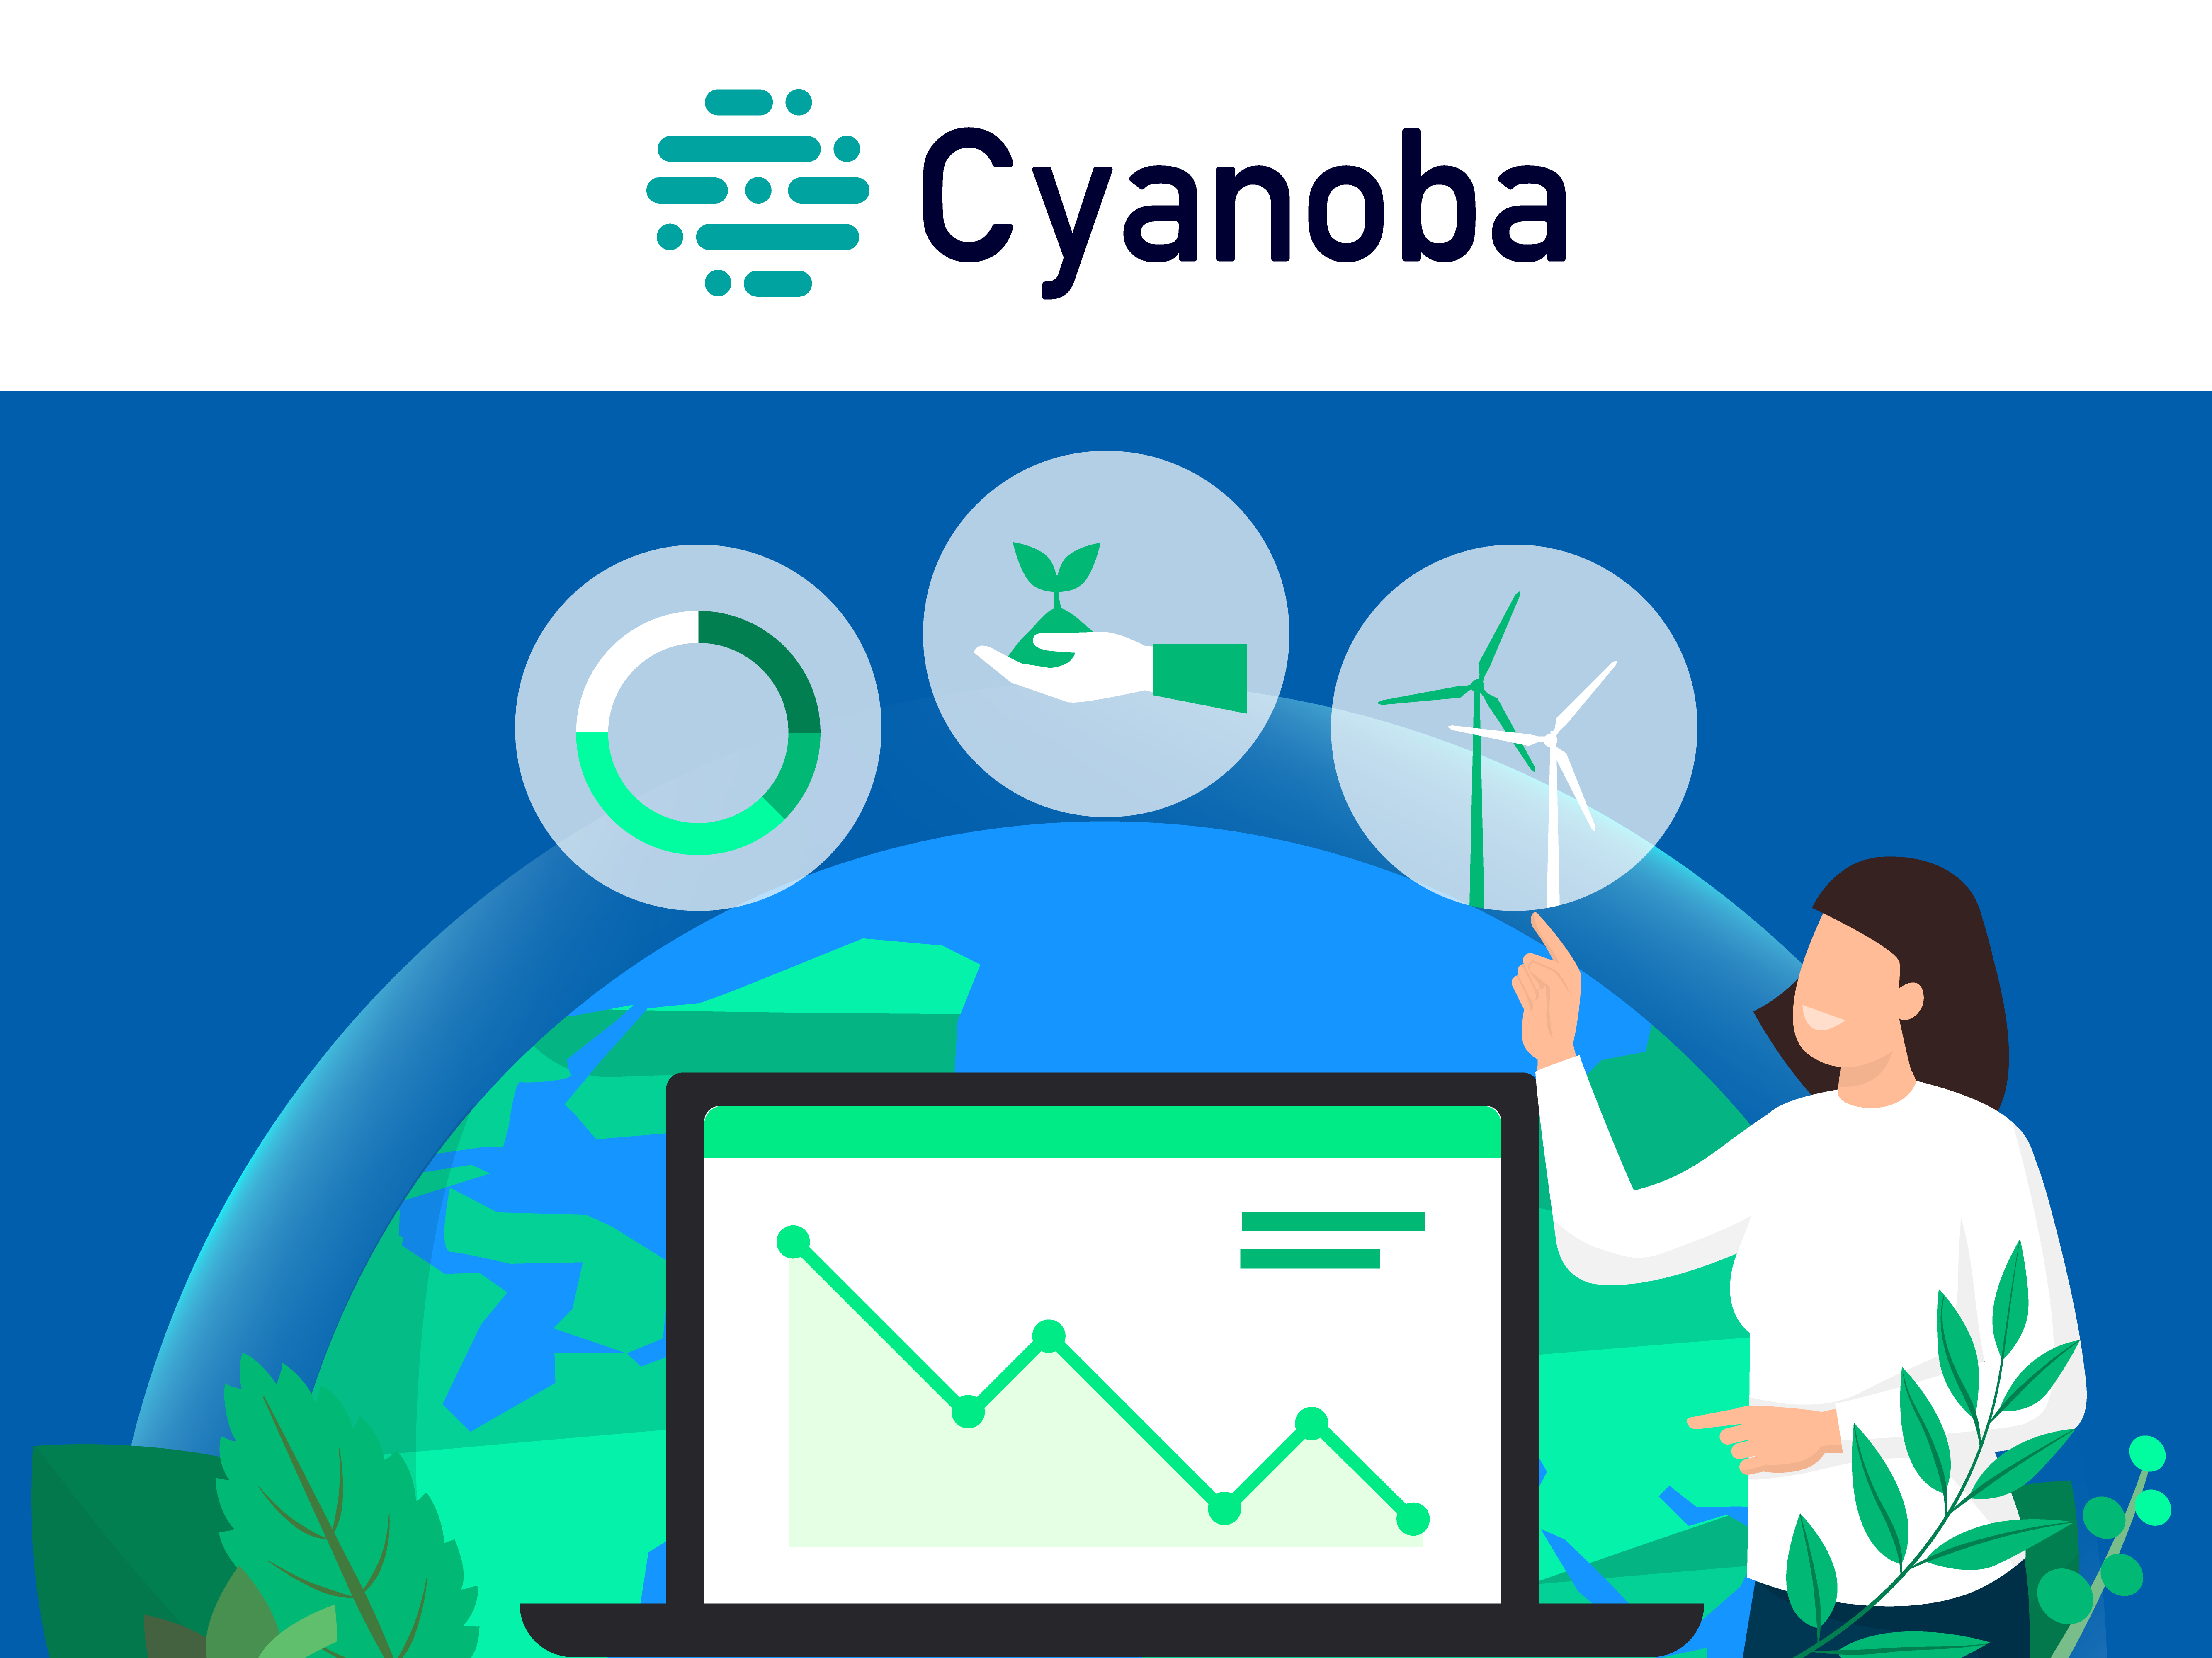 Cyanoba
エネルギーを管理し、分析・改善をサポートする ASP サービス
